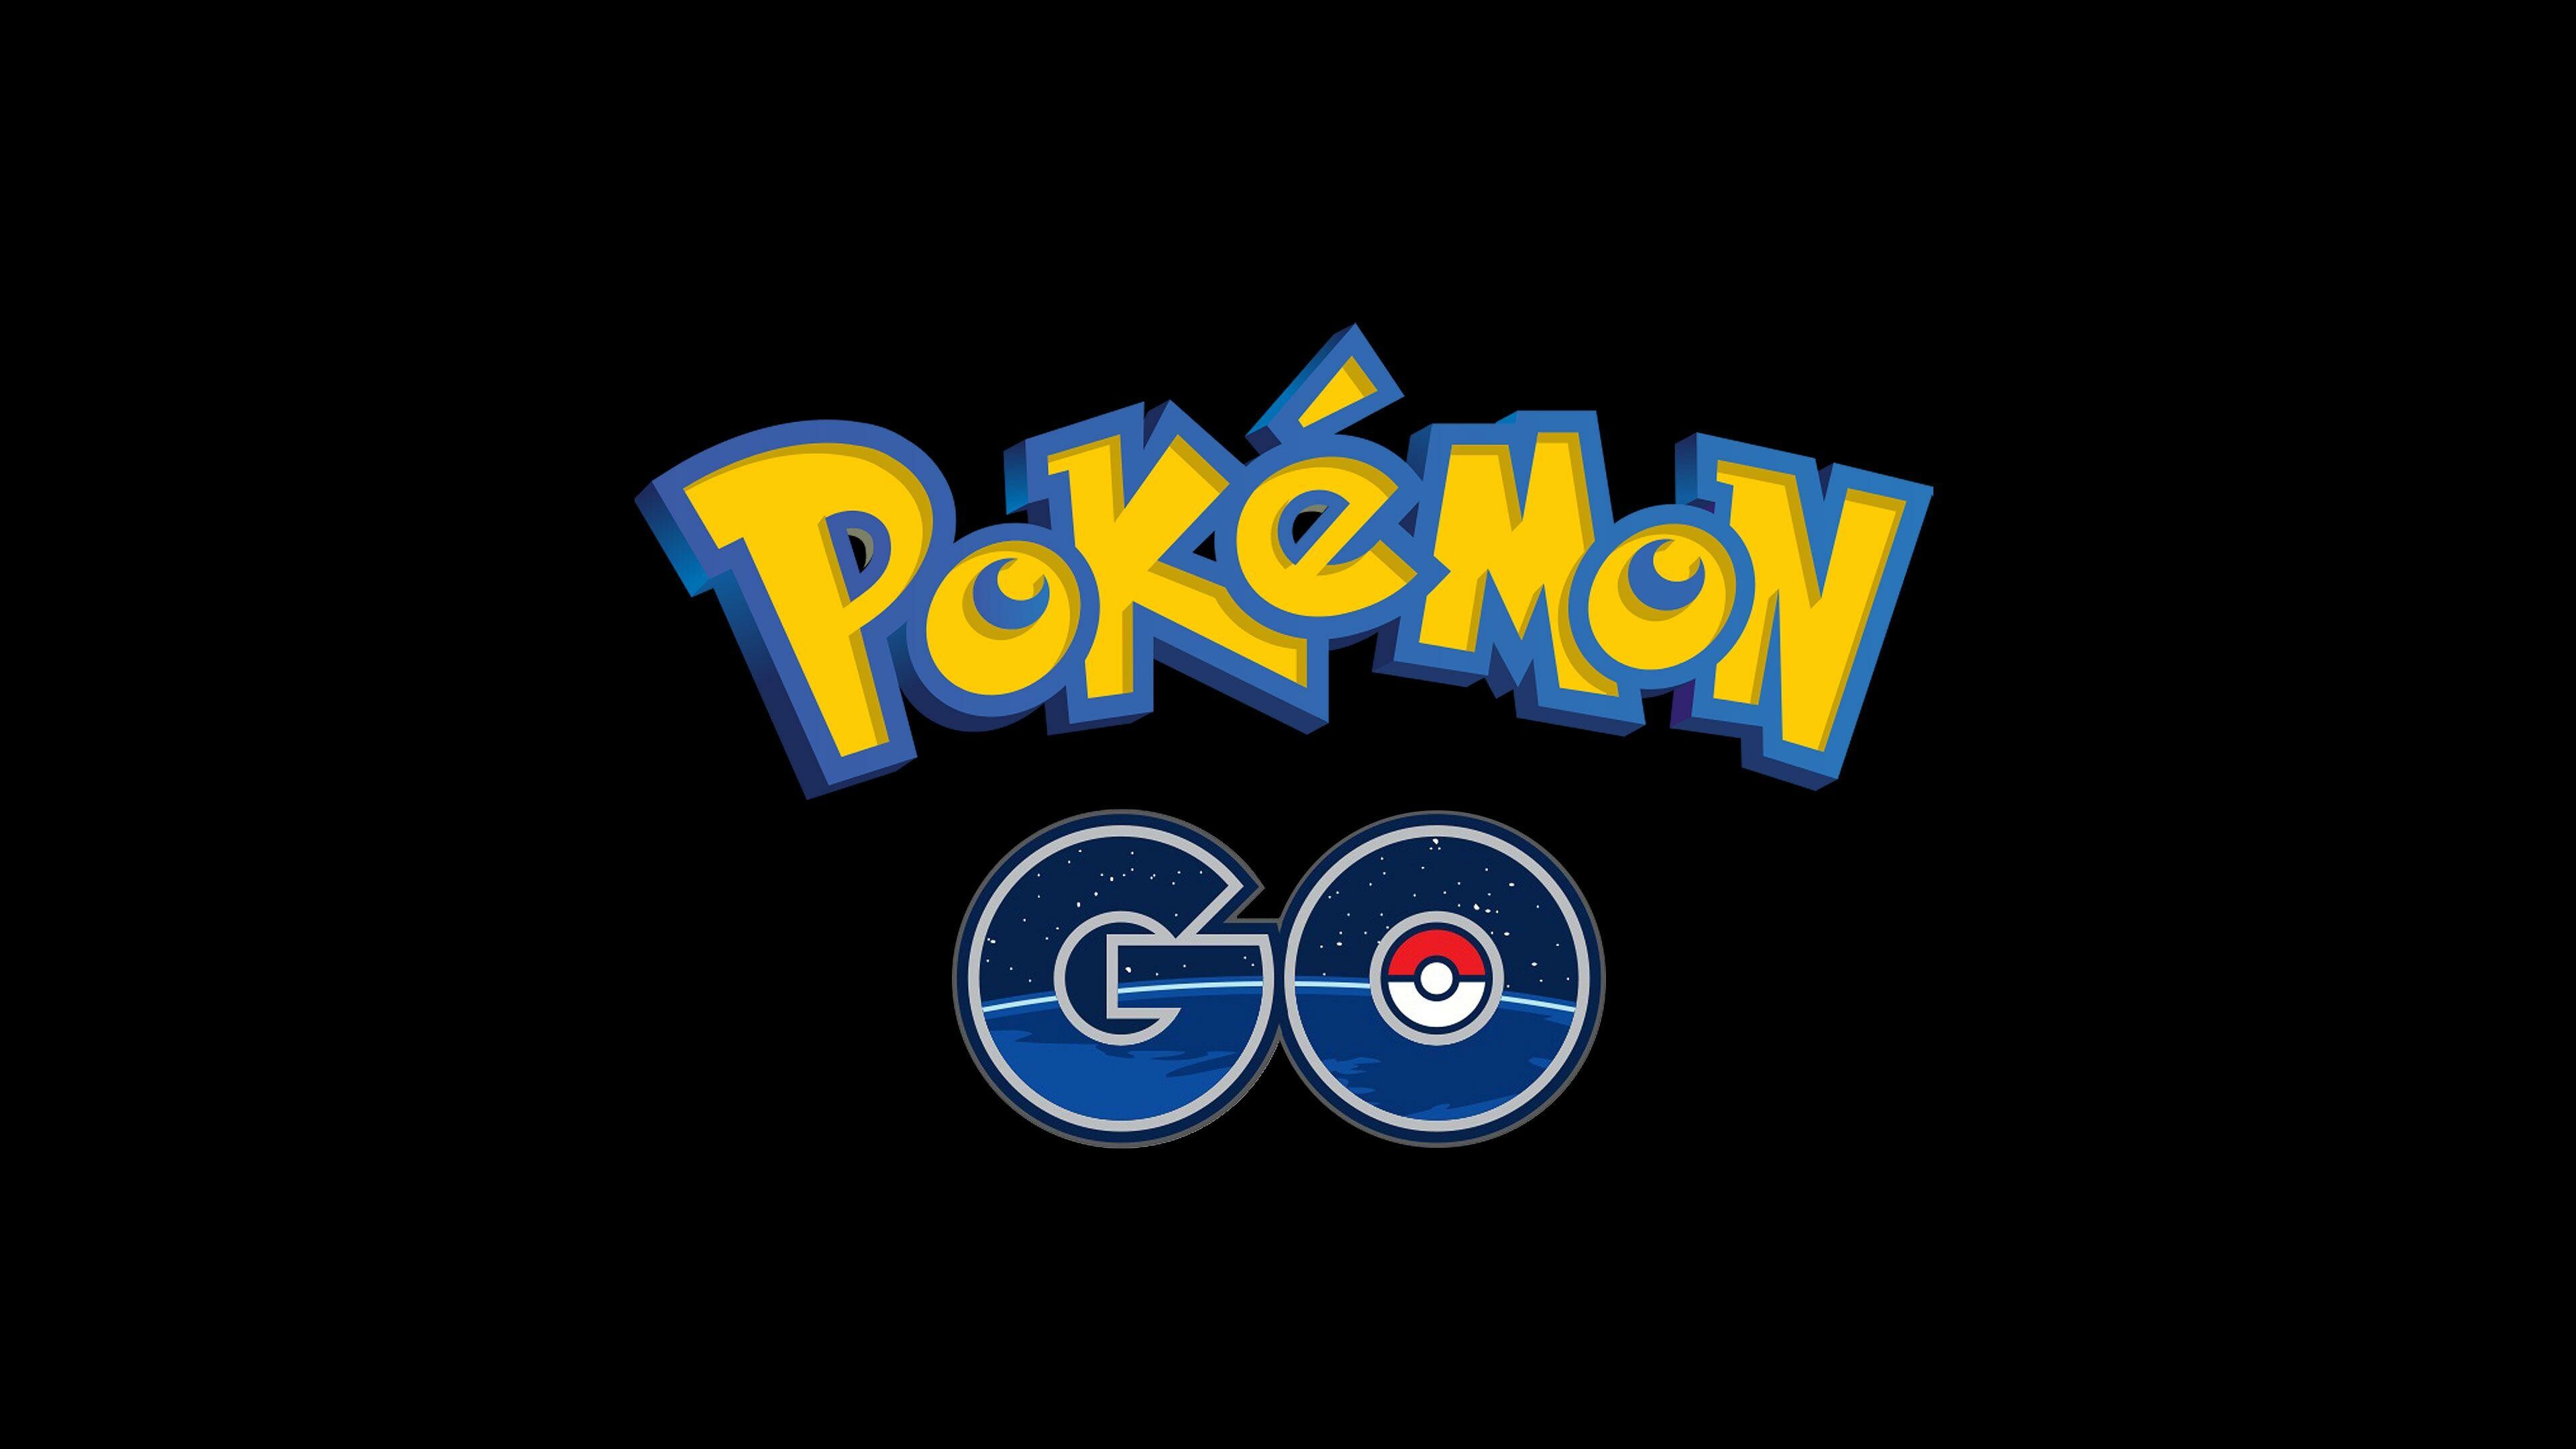 Pokemon Go, Pokemon logo, Game wallpapers, 3840x2160 4K Desktop